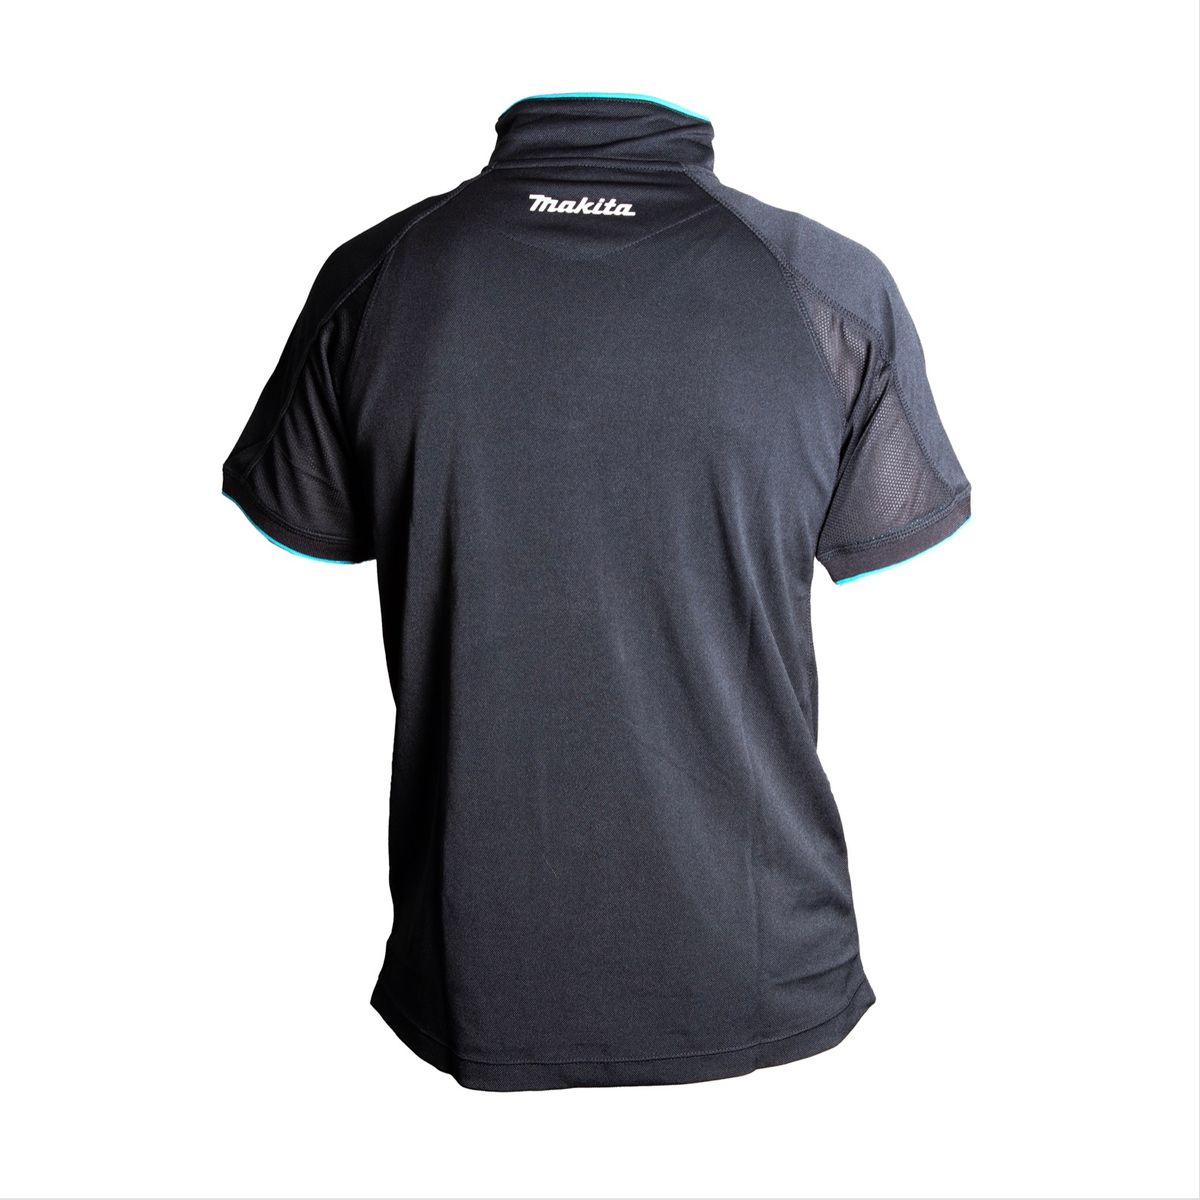 Makita 98P138-L Bicycle T-Shirt Black Size - Large